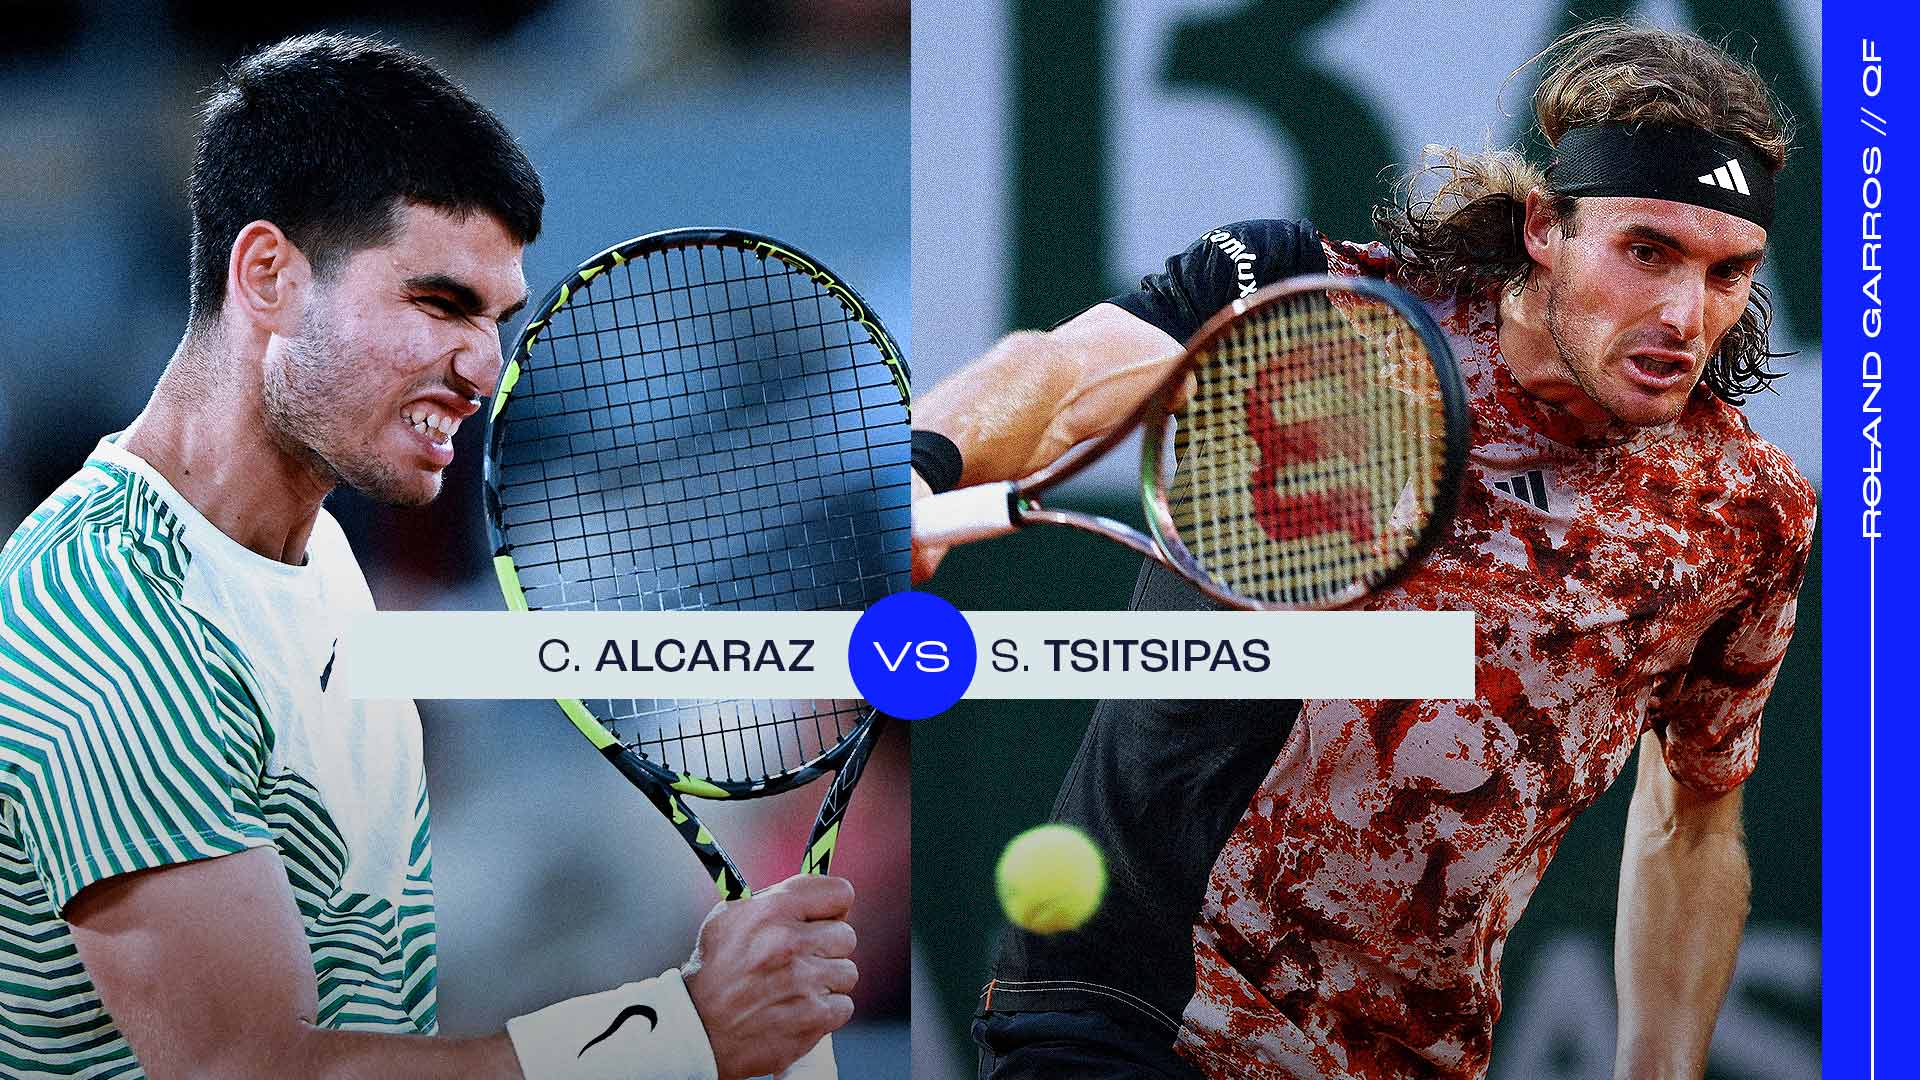 Carlos alcaraz vs stefanos tsitsipas